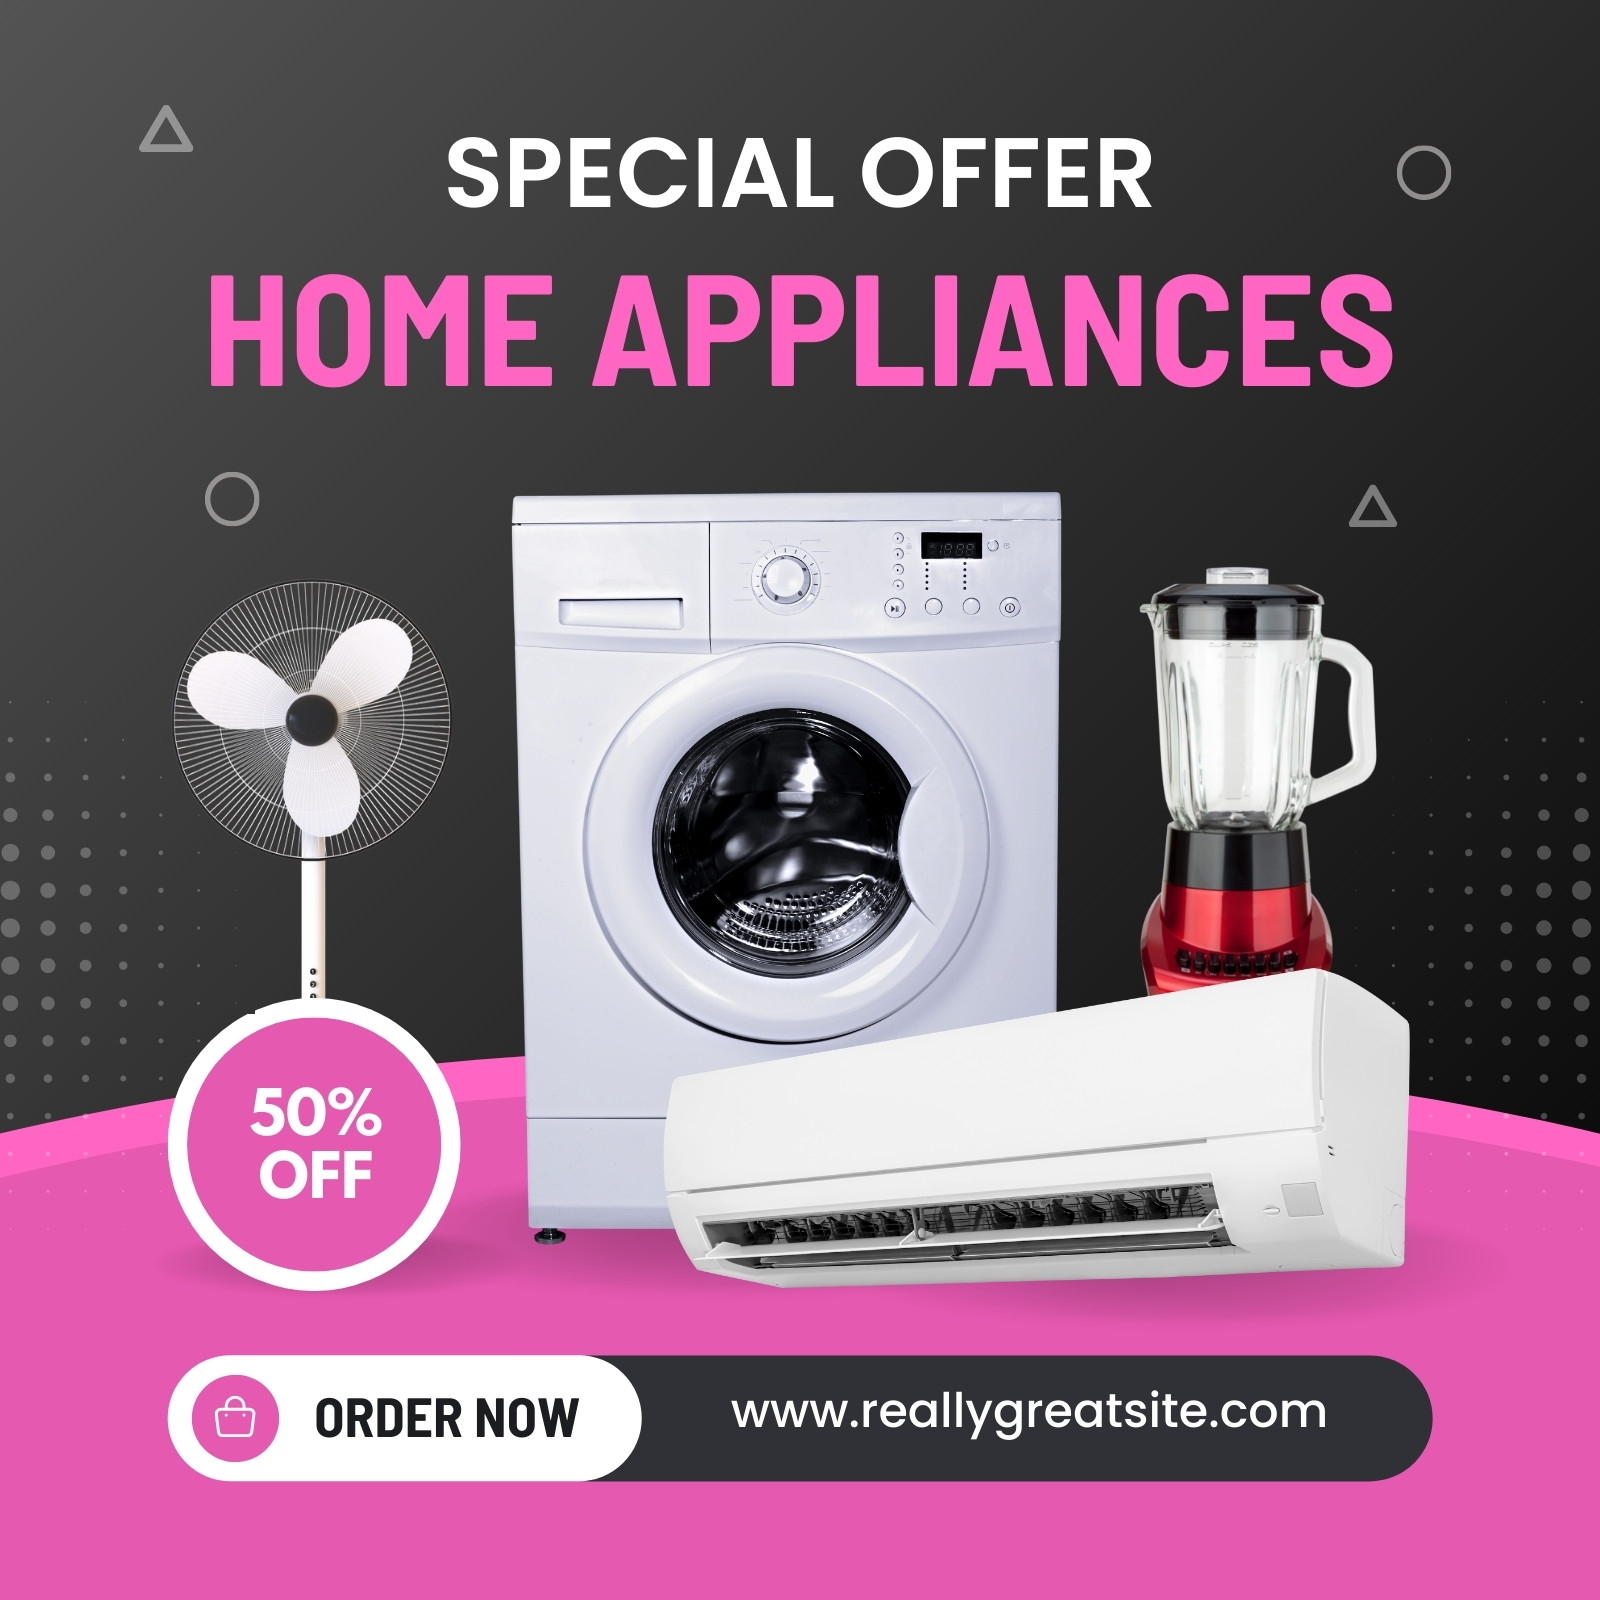 https://marketplace.canva.com/EAFTJKw9eJQ/1/0/1600w/canva-black-%26-pink-minimalist-home-appliances-sale-instagram-post-H_GSyNM0TFE.jpg